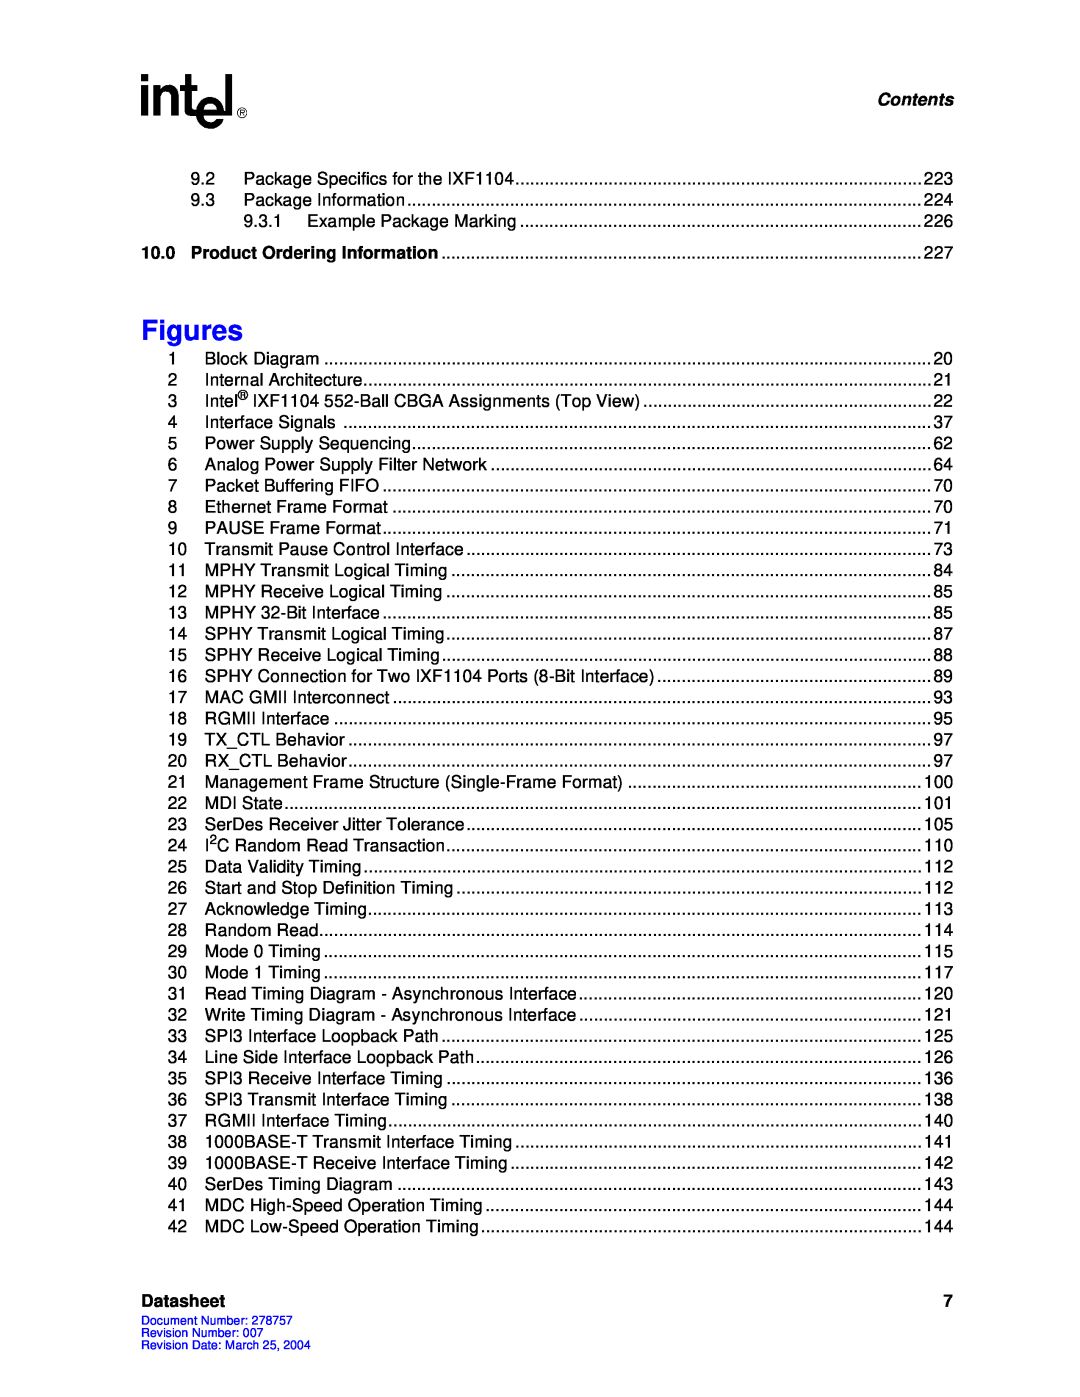 Intel IXF1104 manual Figures, 10.0, Contents, Datasheet 